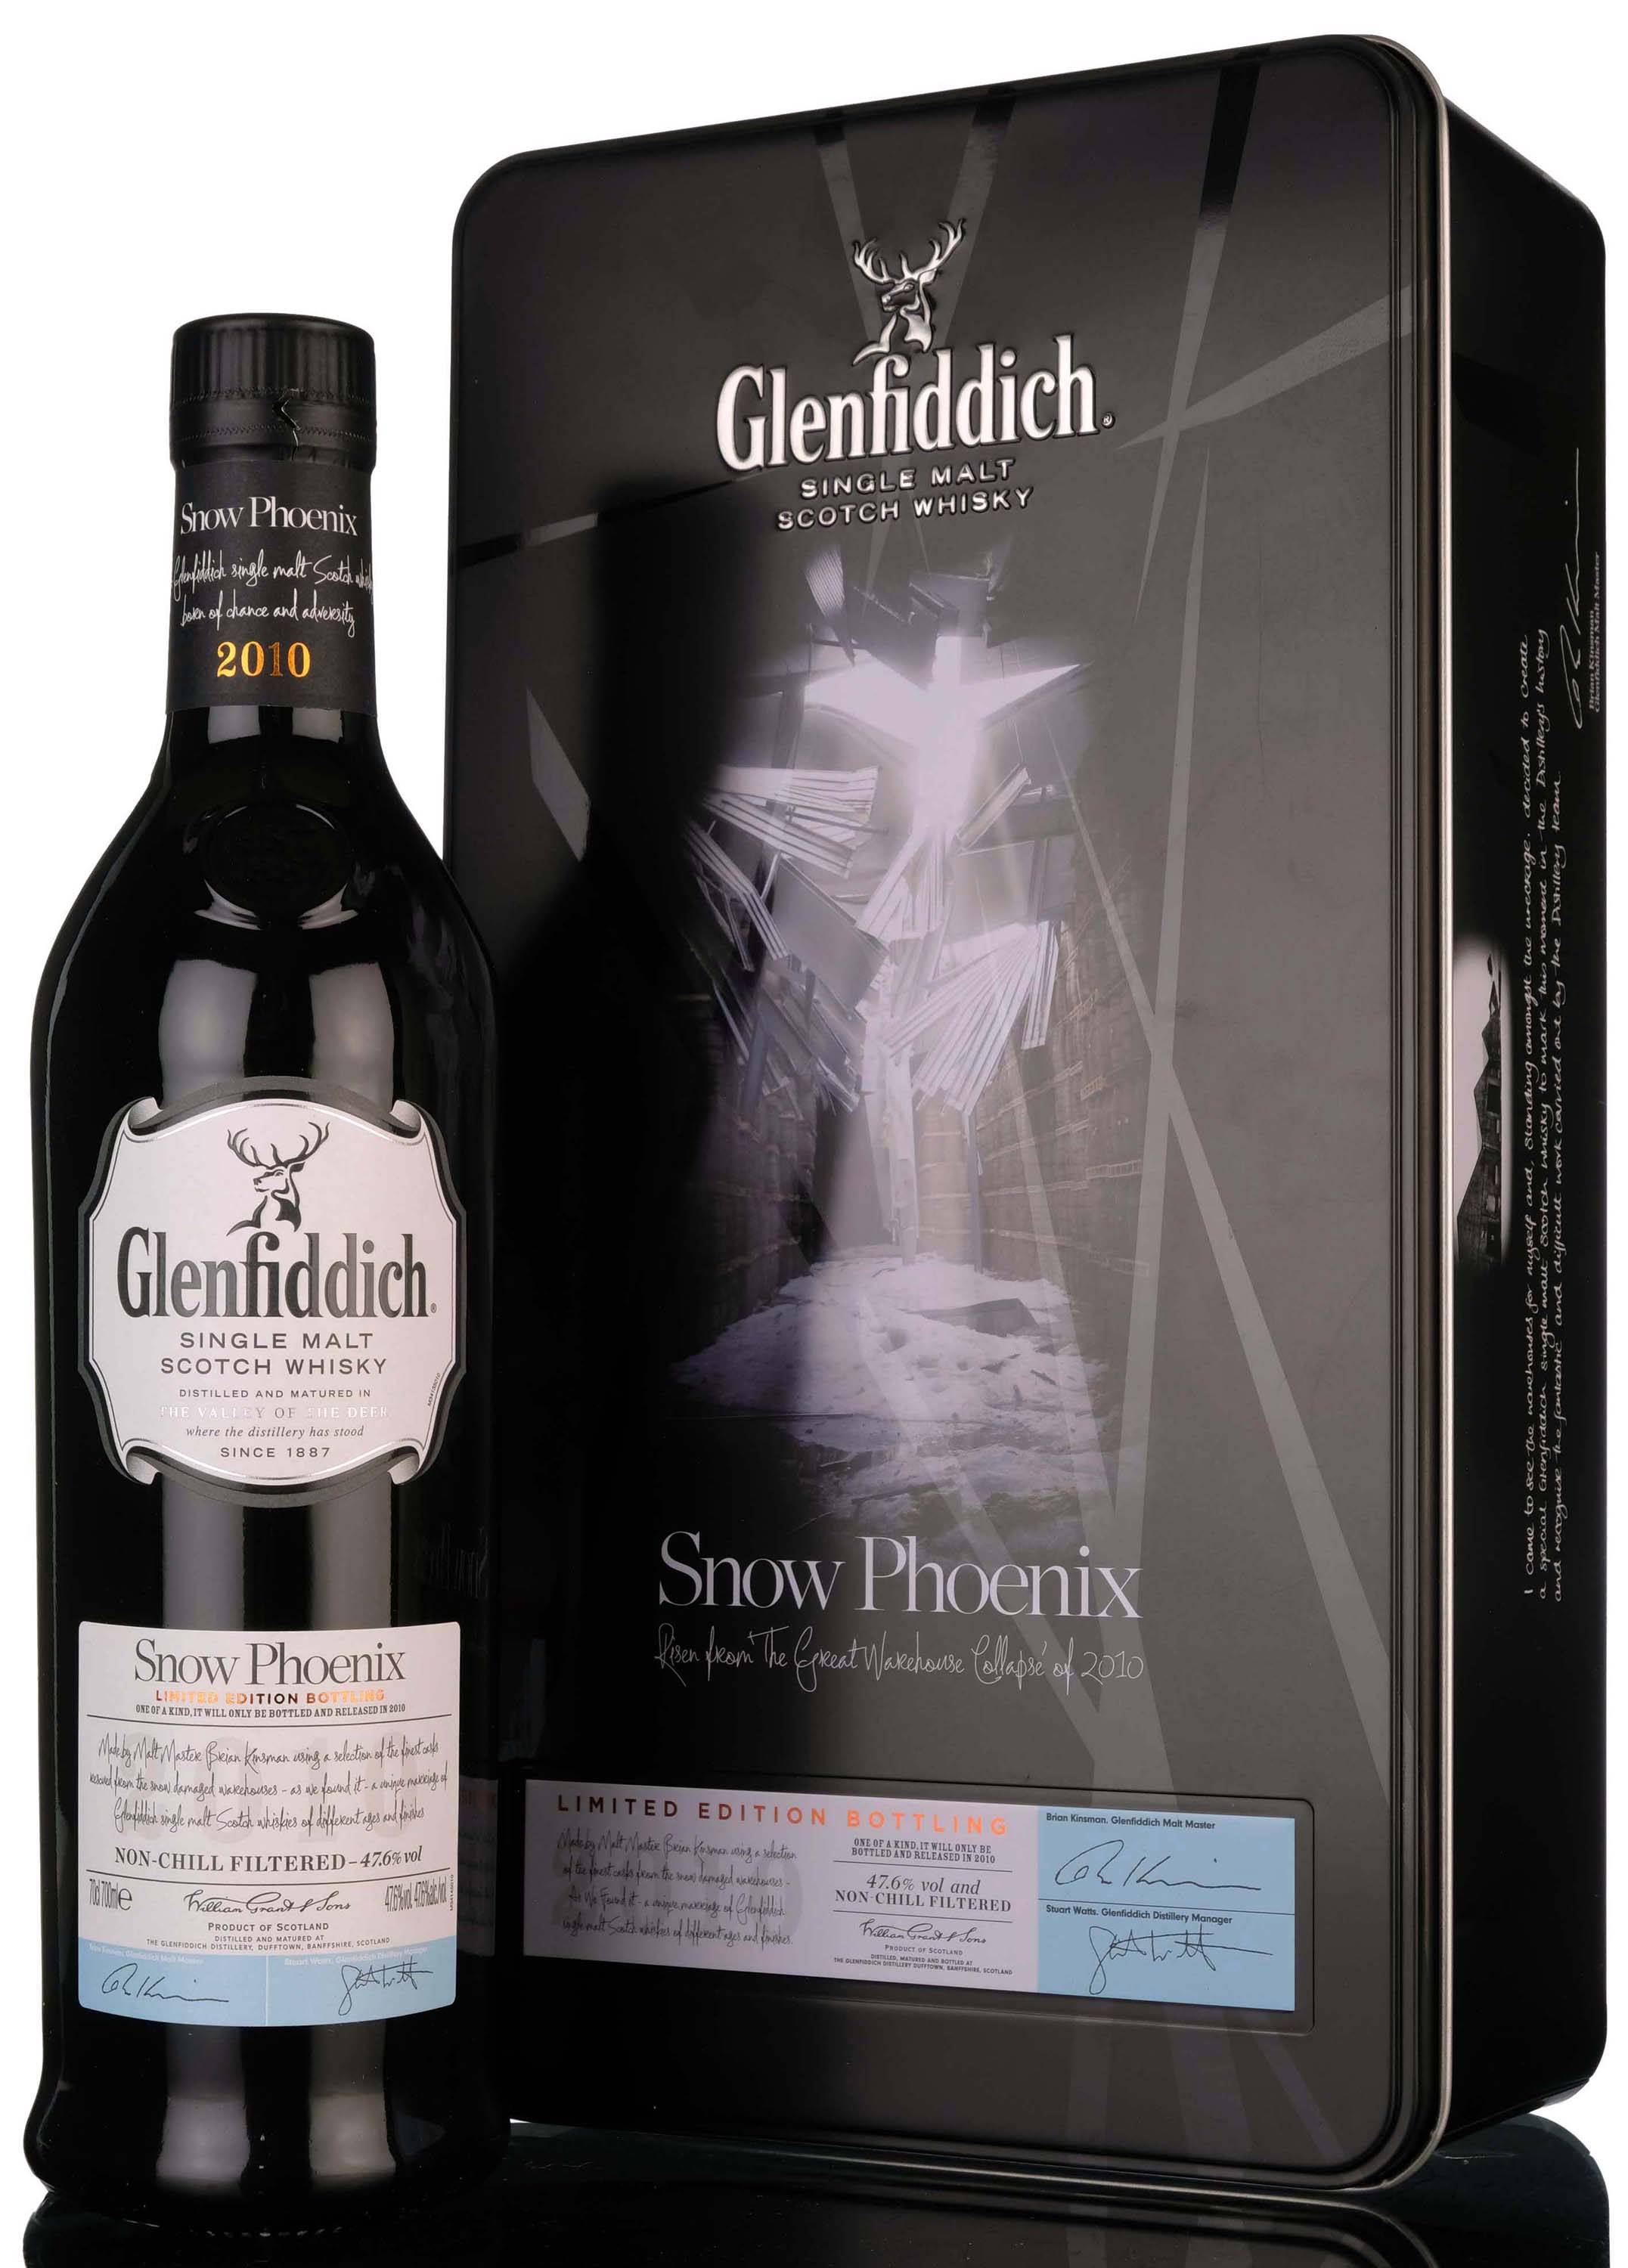 Glenfiddich Snow Phoenix - 2010 Release